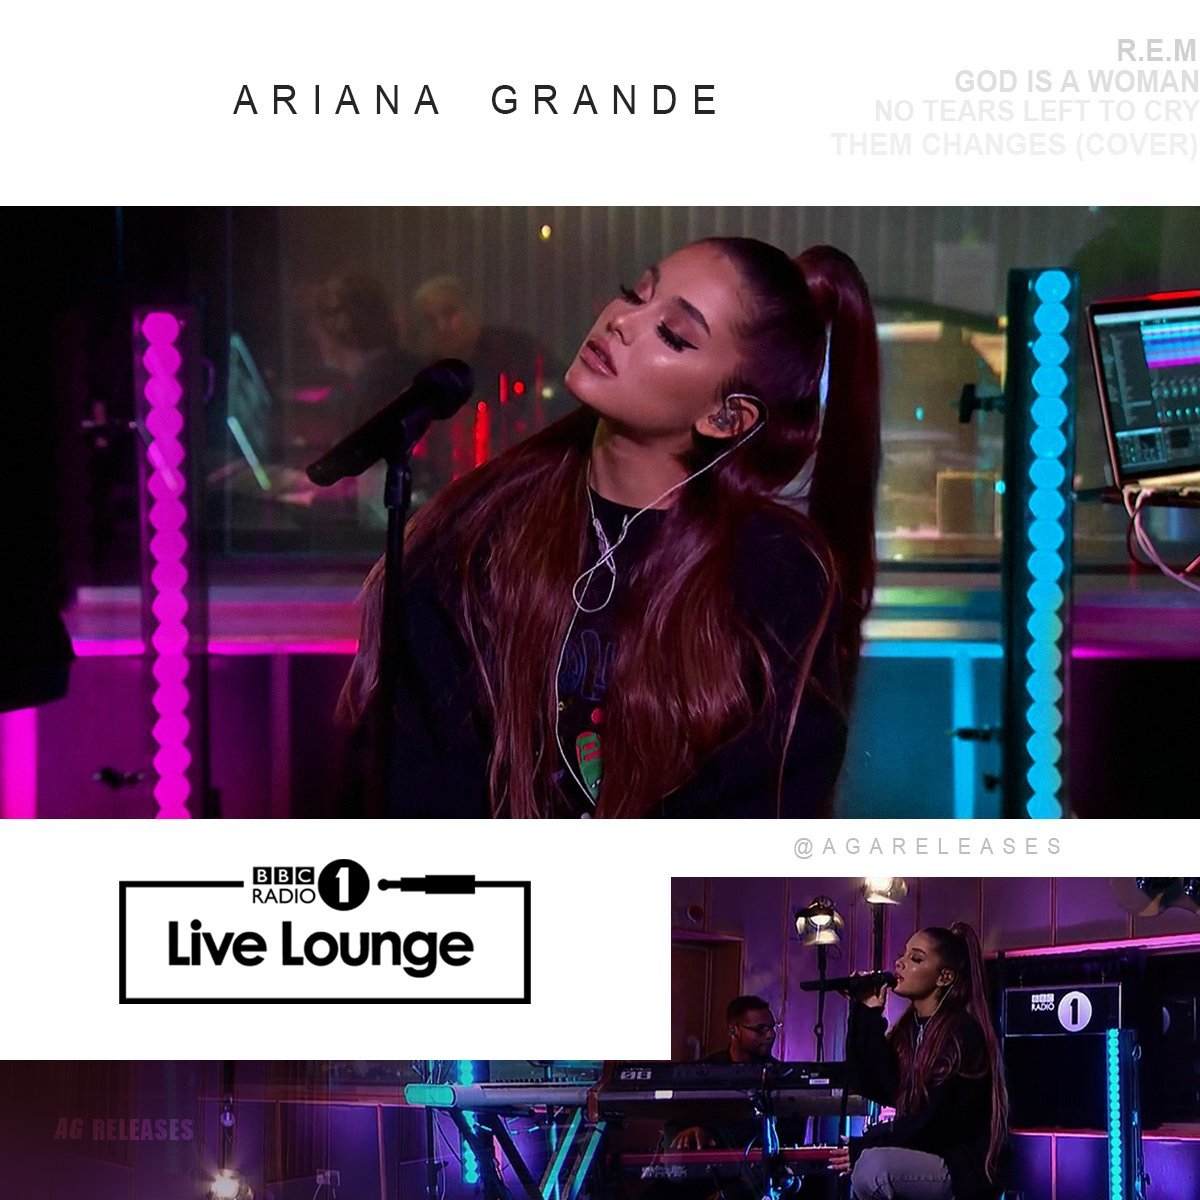 Ariana Grande - Live Lounge (BBC Radio 1) Artwork (1 of 1) | Last.fm